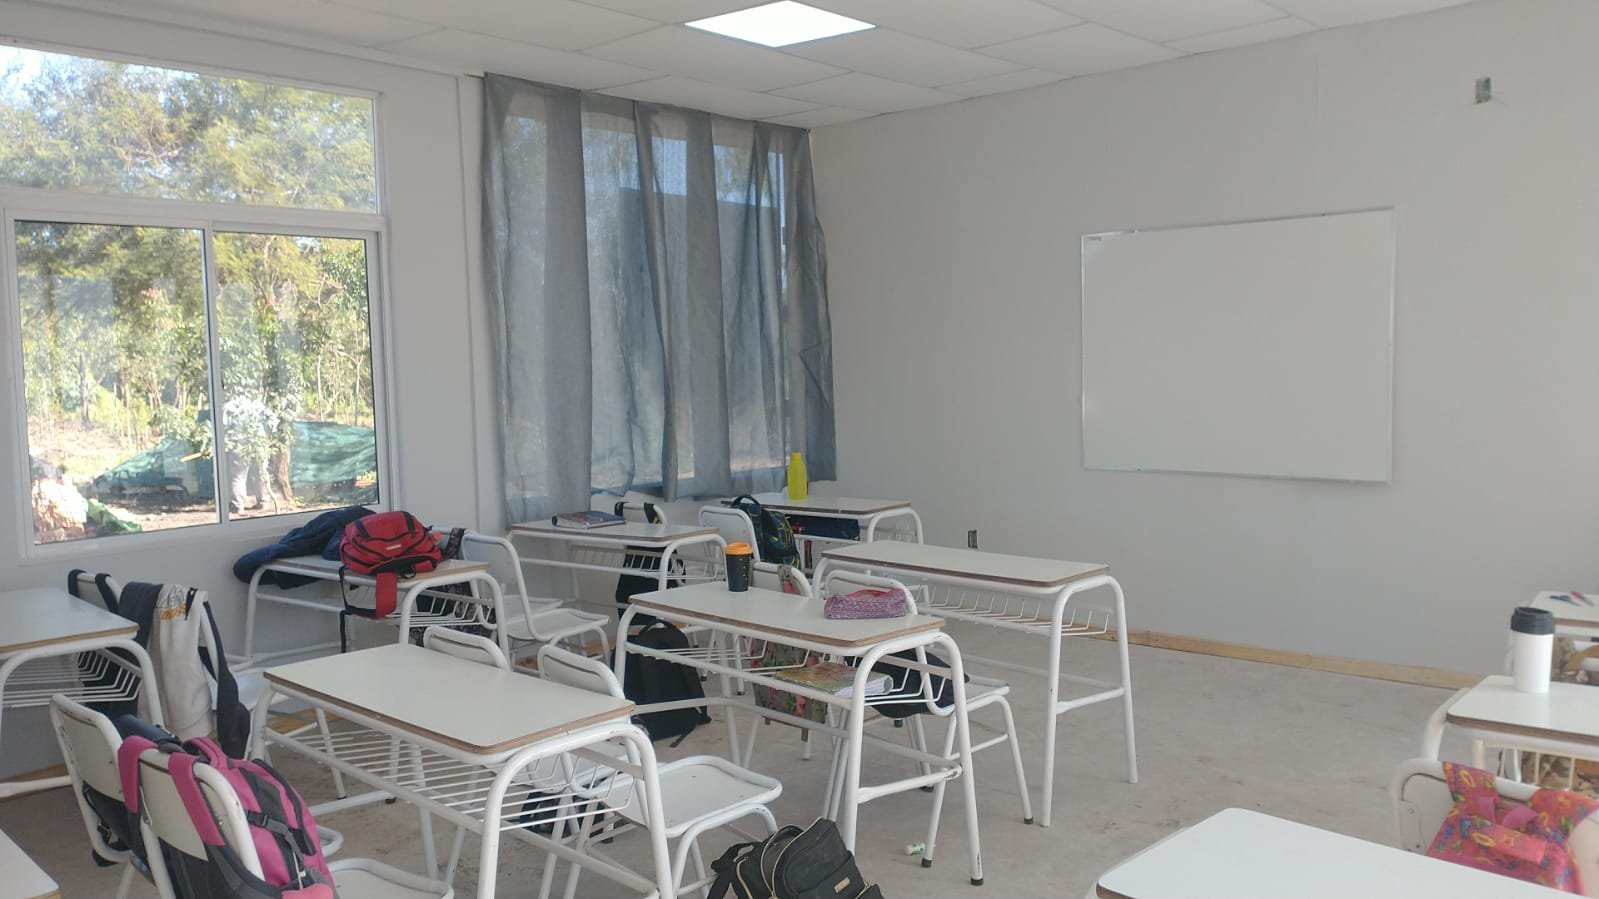  A finished classroom 